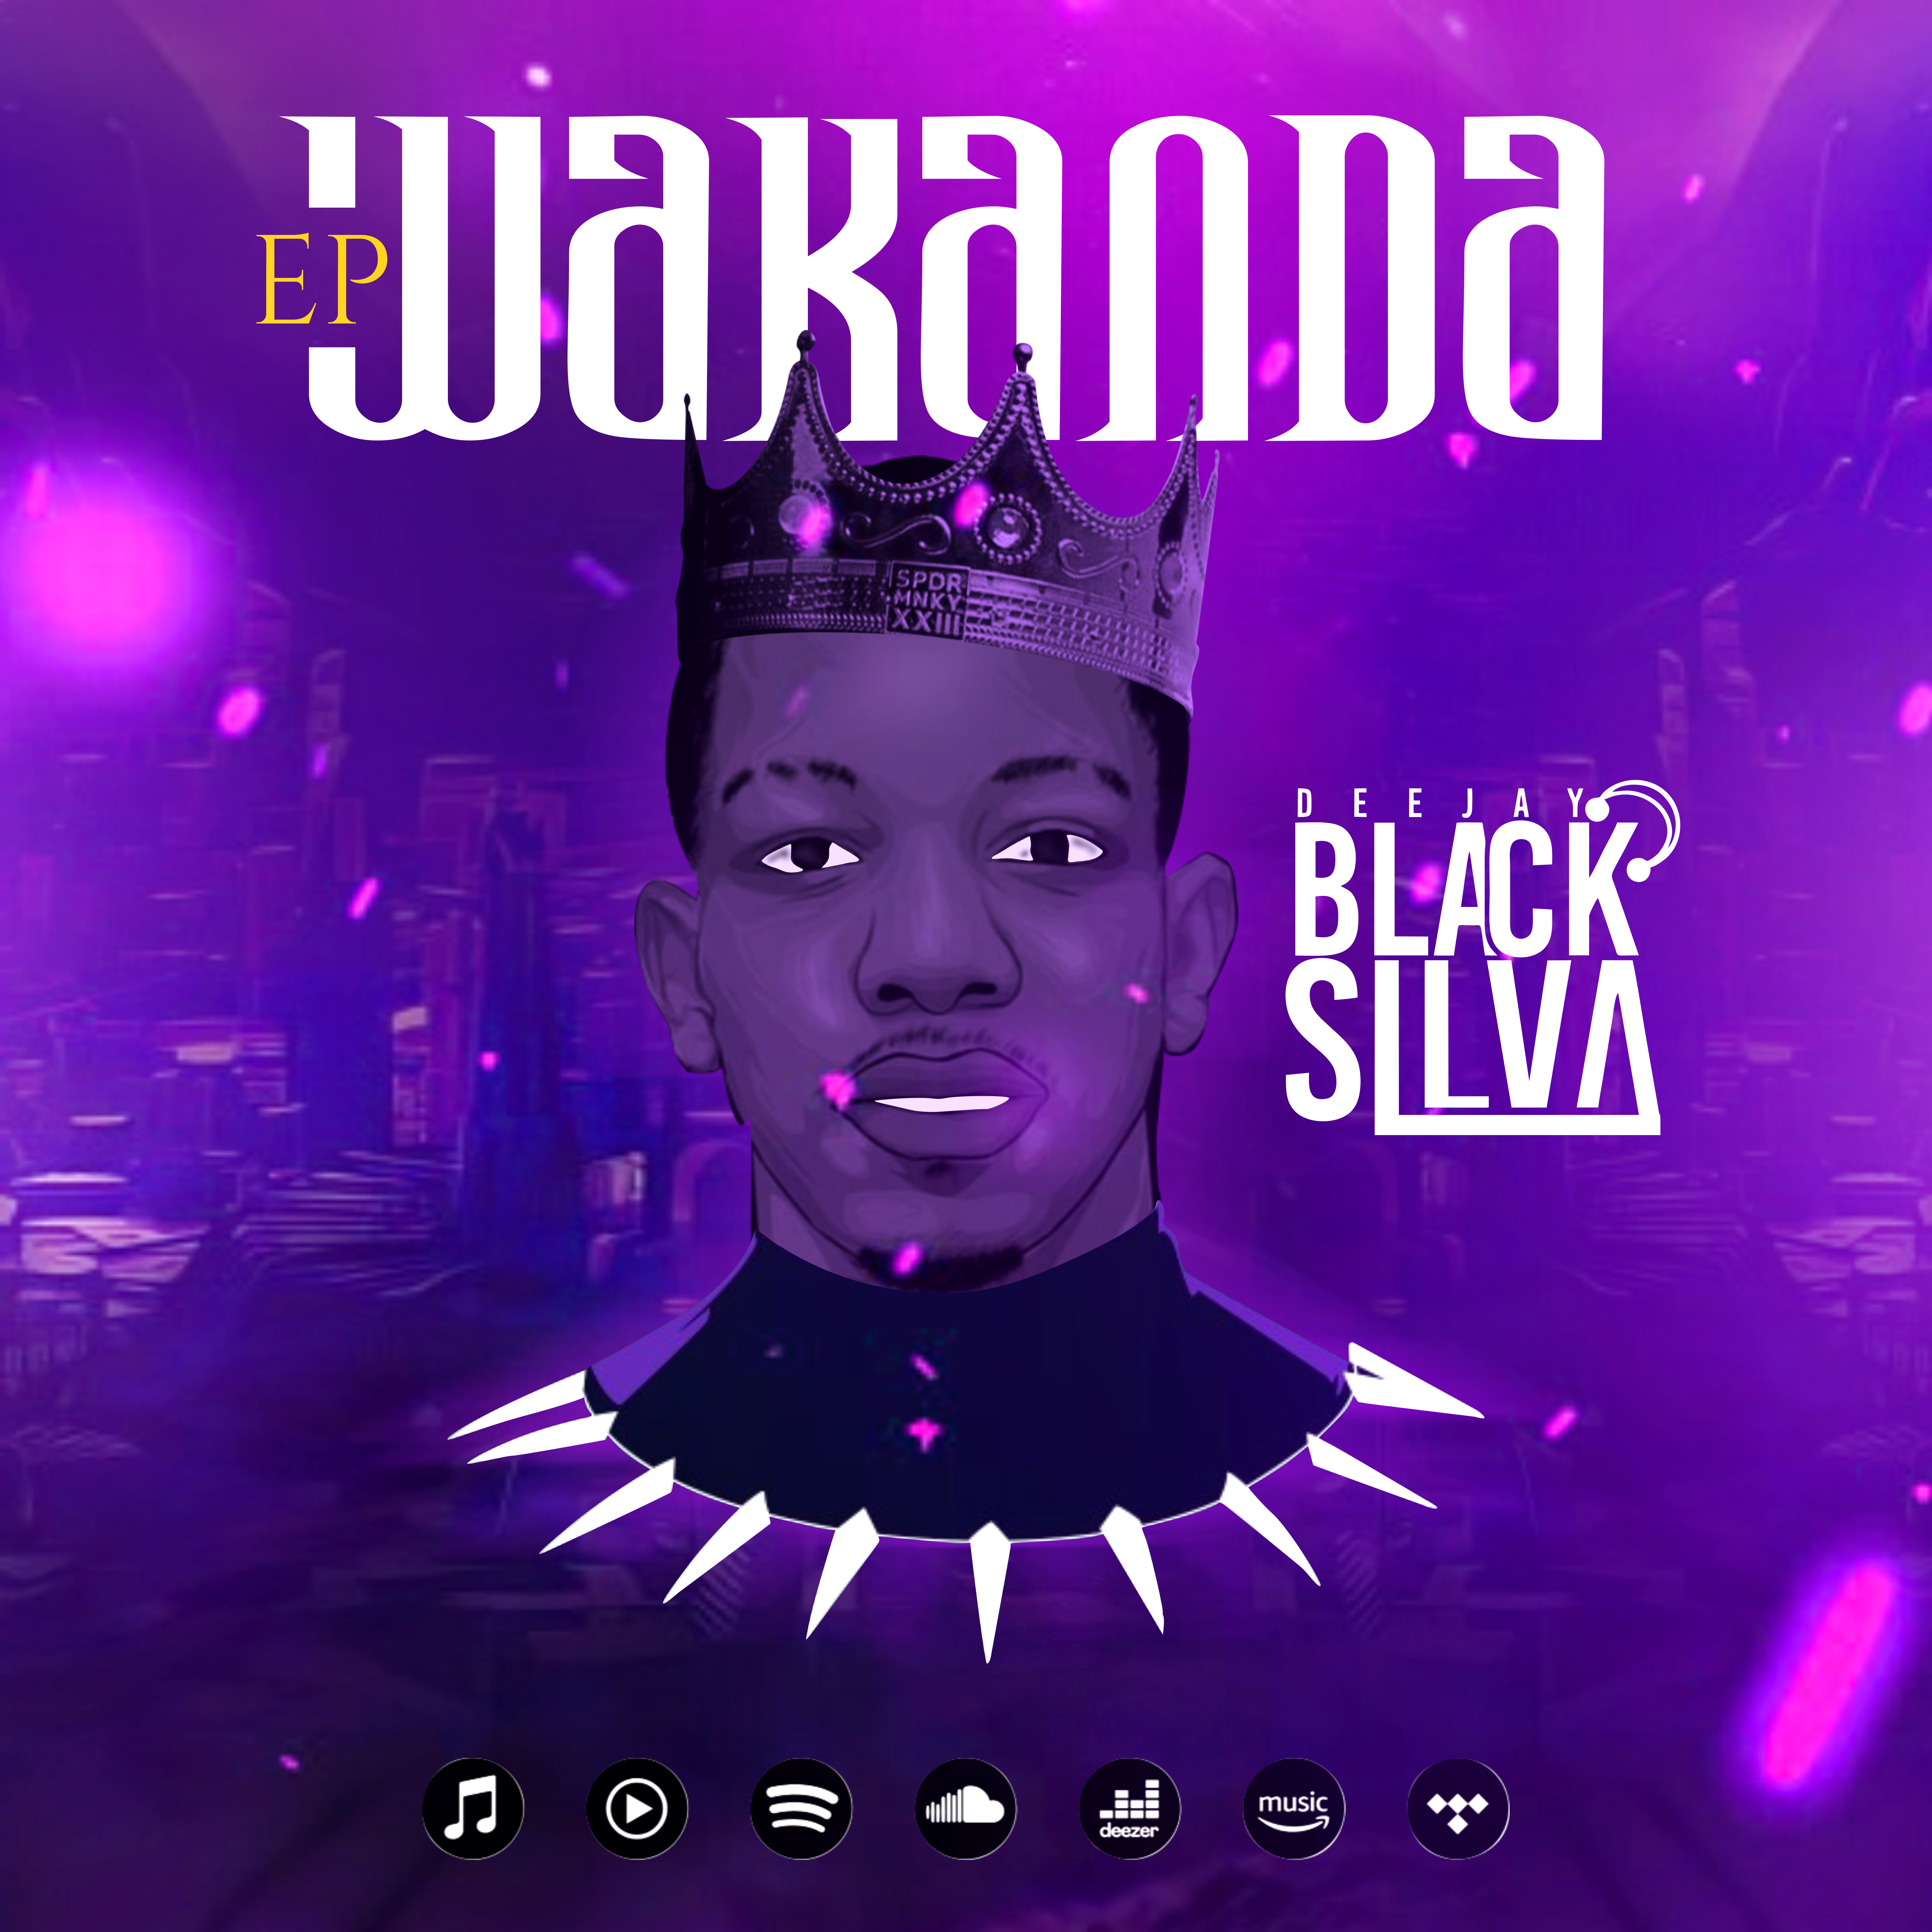 Dj Black Silva - Wakanda Instrumental de Afro House mp3 download